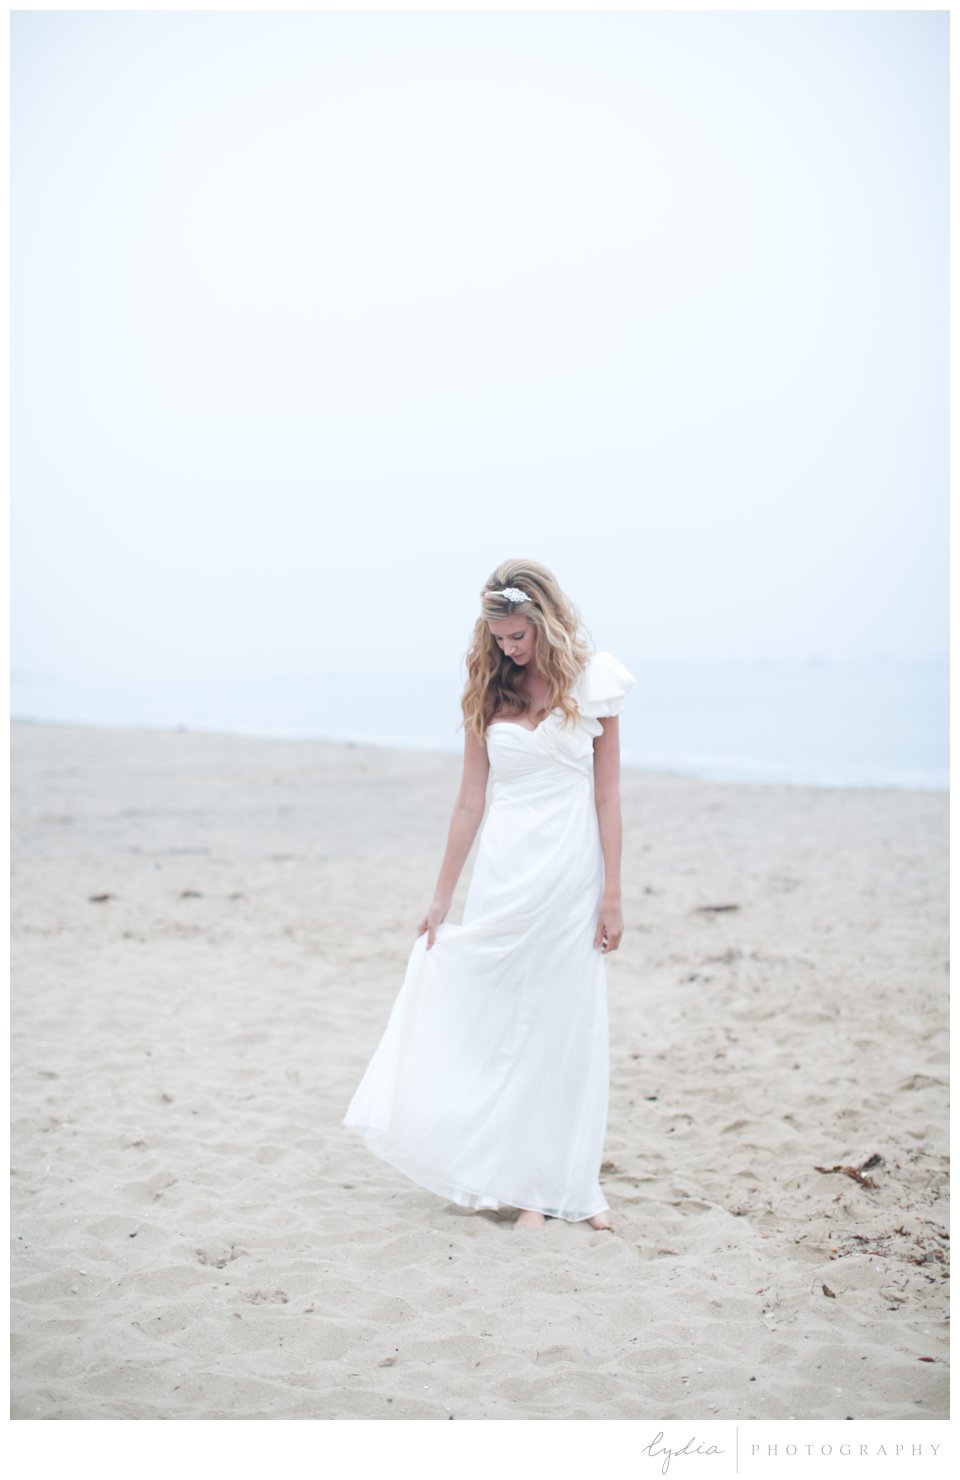 Bride holding up her wedding dress on ocean beach in Santa Barbara, California